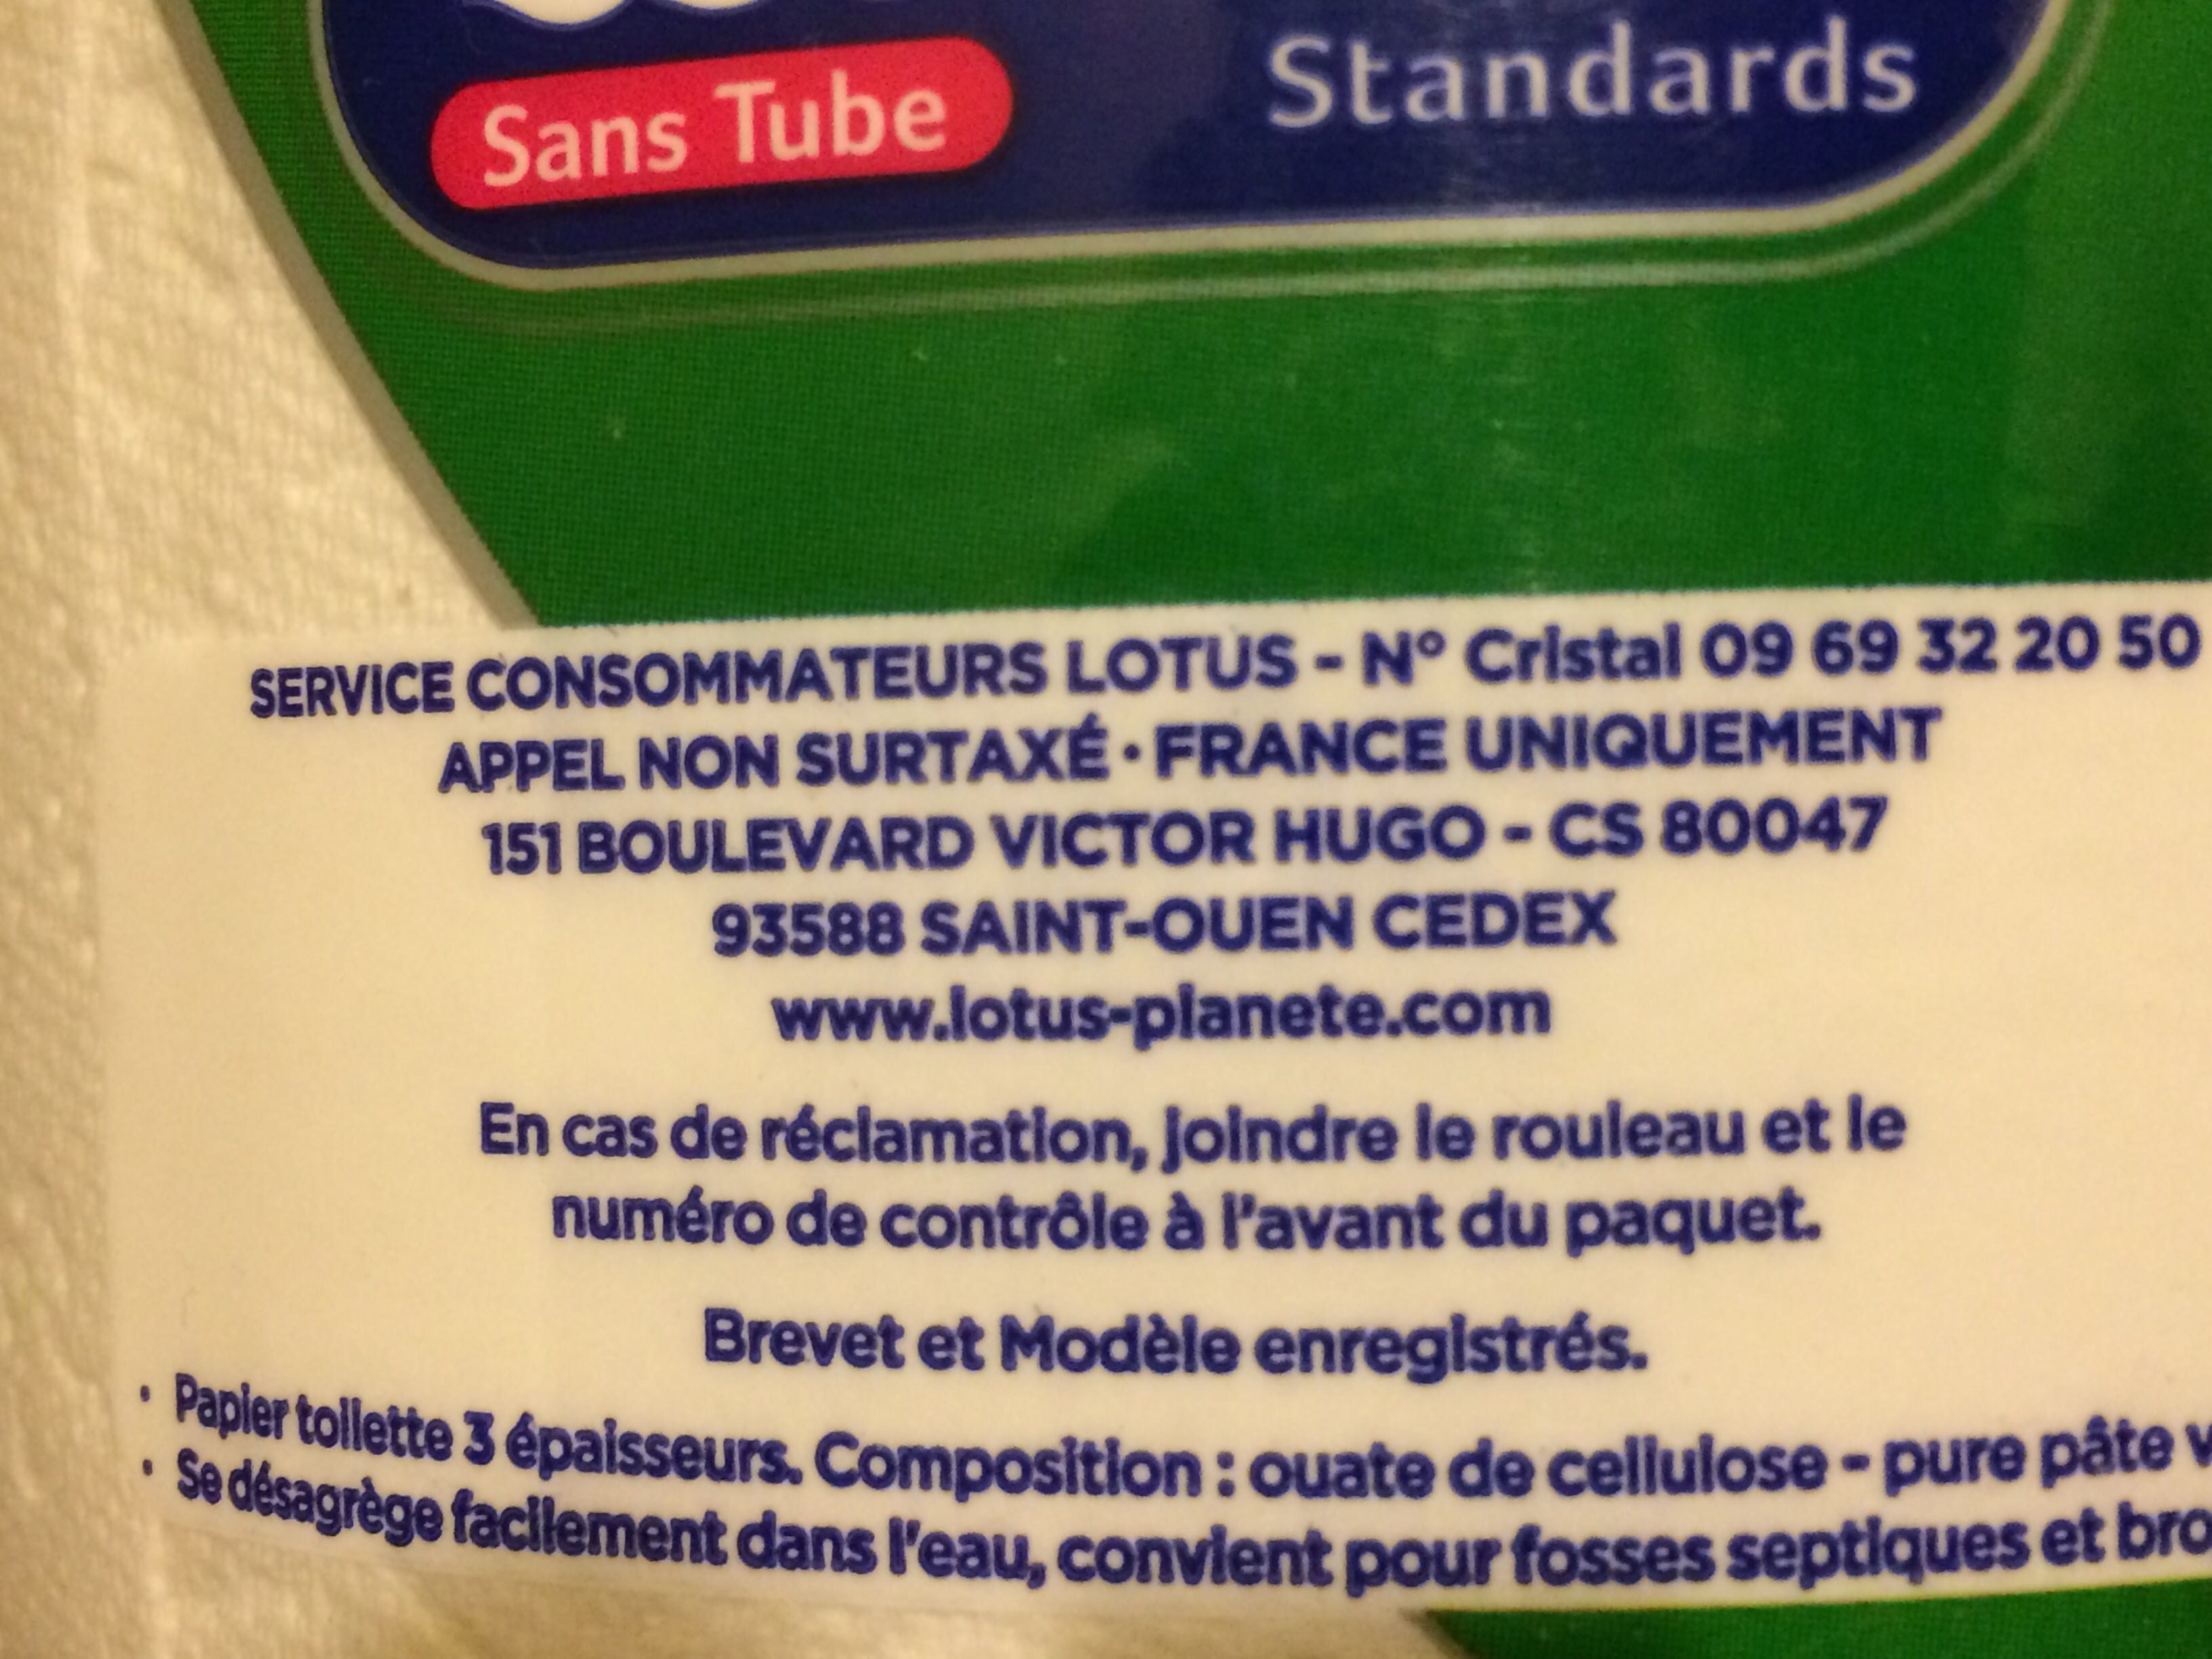 Papier toilette Moltonel - Inhaltsstoffe - fr